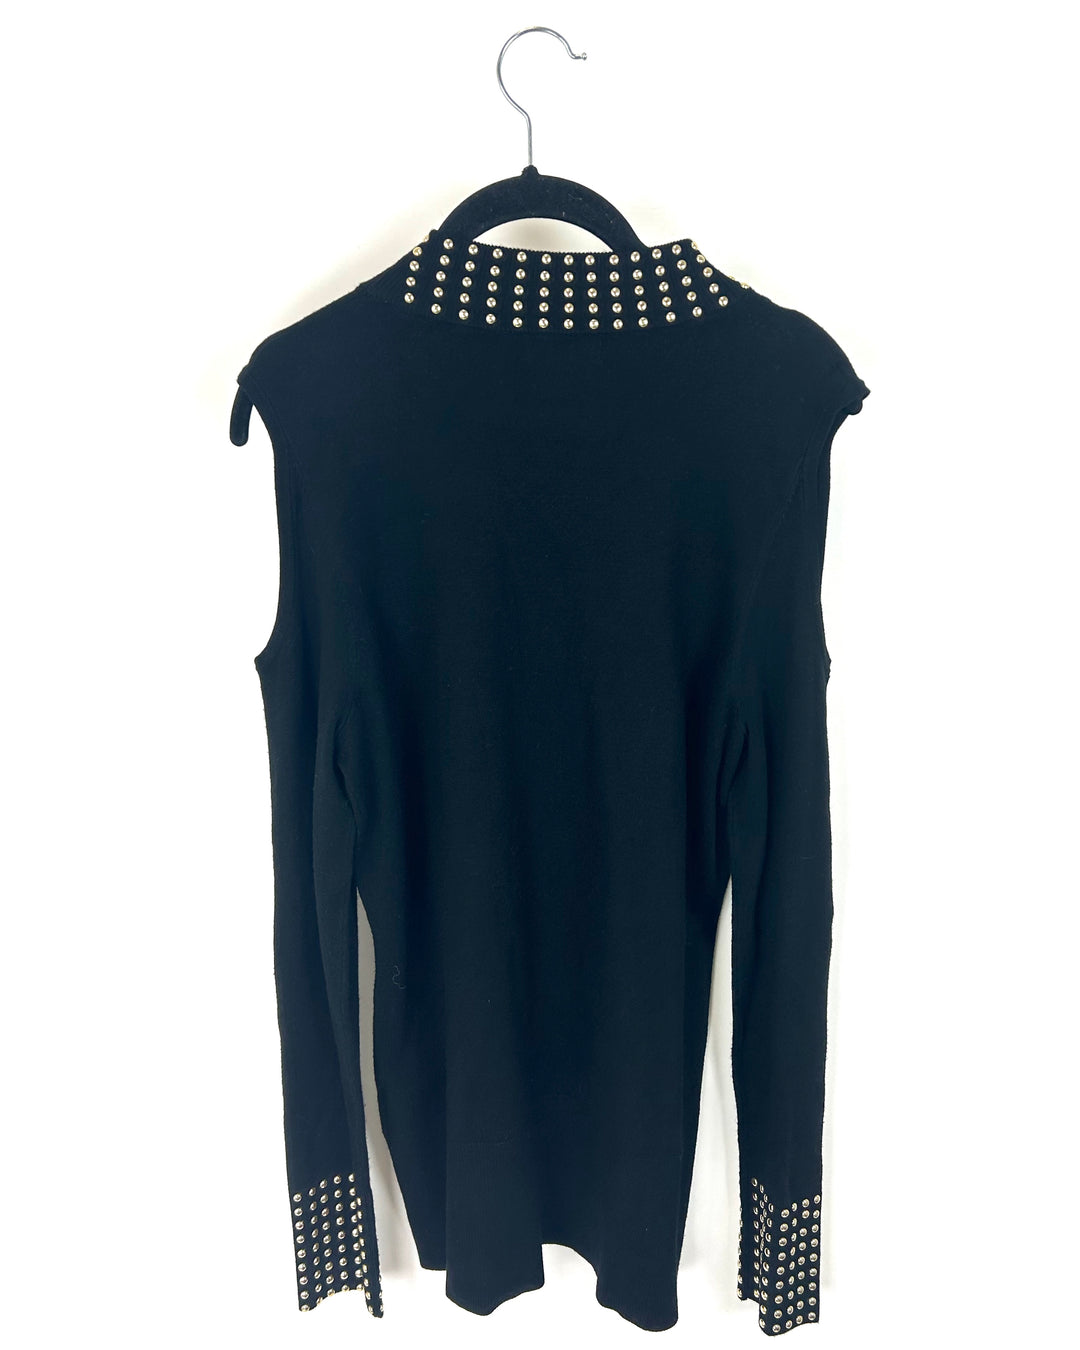 Black Studded Cutout Sweater - Medium